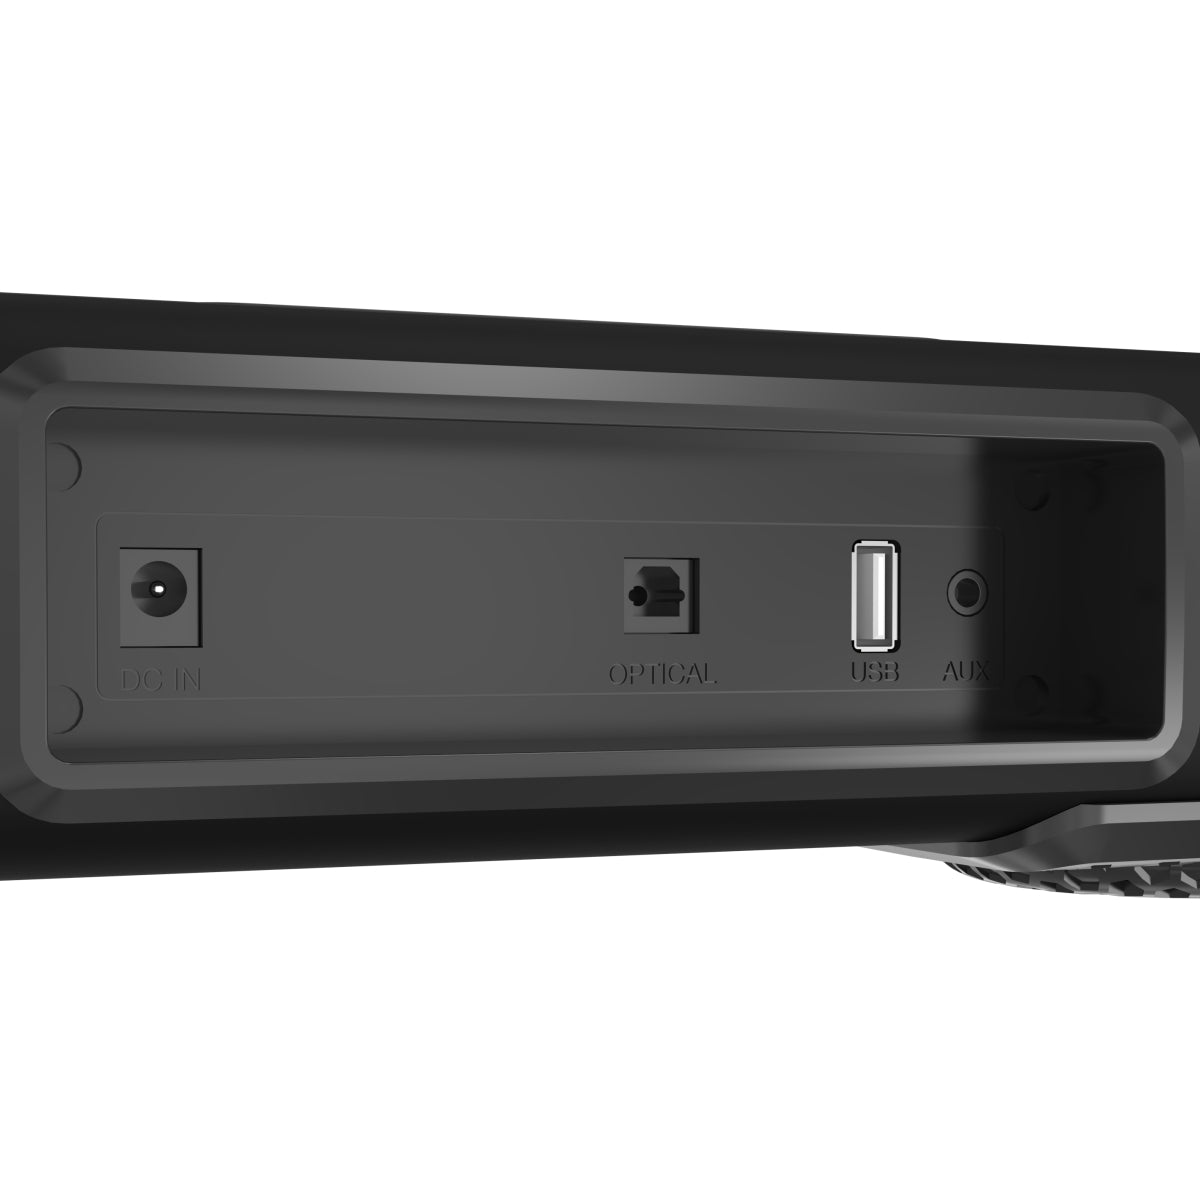 Portronics Sound Slick IV soundbar with wireless subwoofer,120W with multi connectivity options. Black